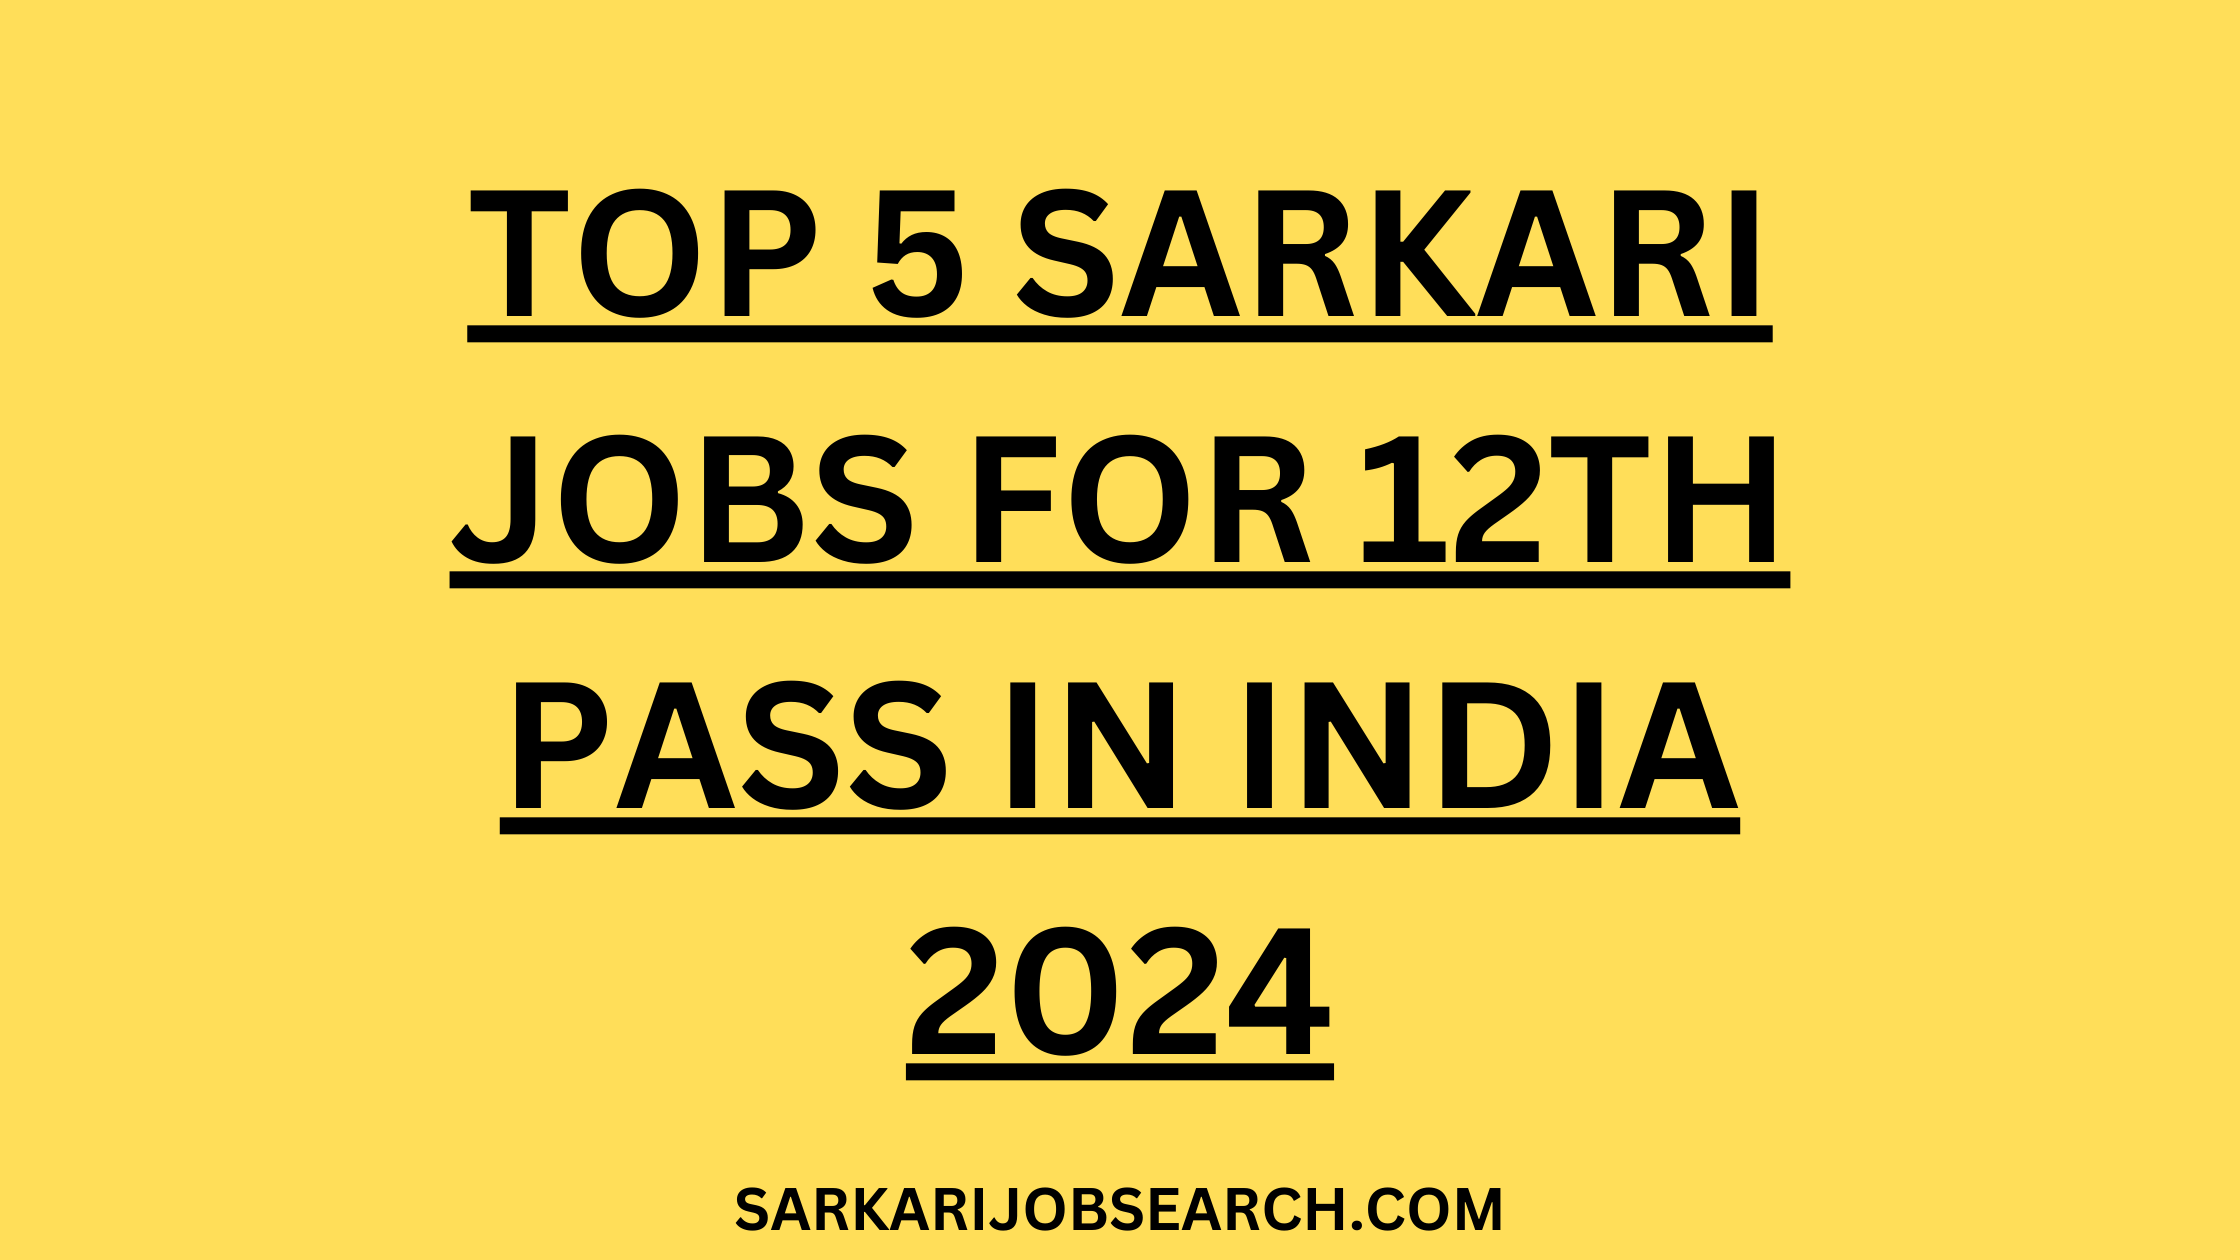 Top 5 Sarkari Jobs for 12th Pass in India 2024